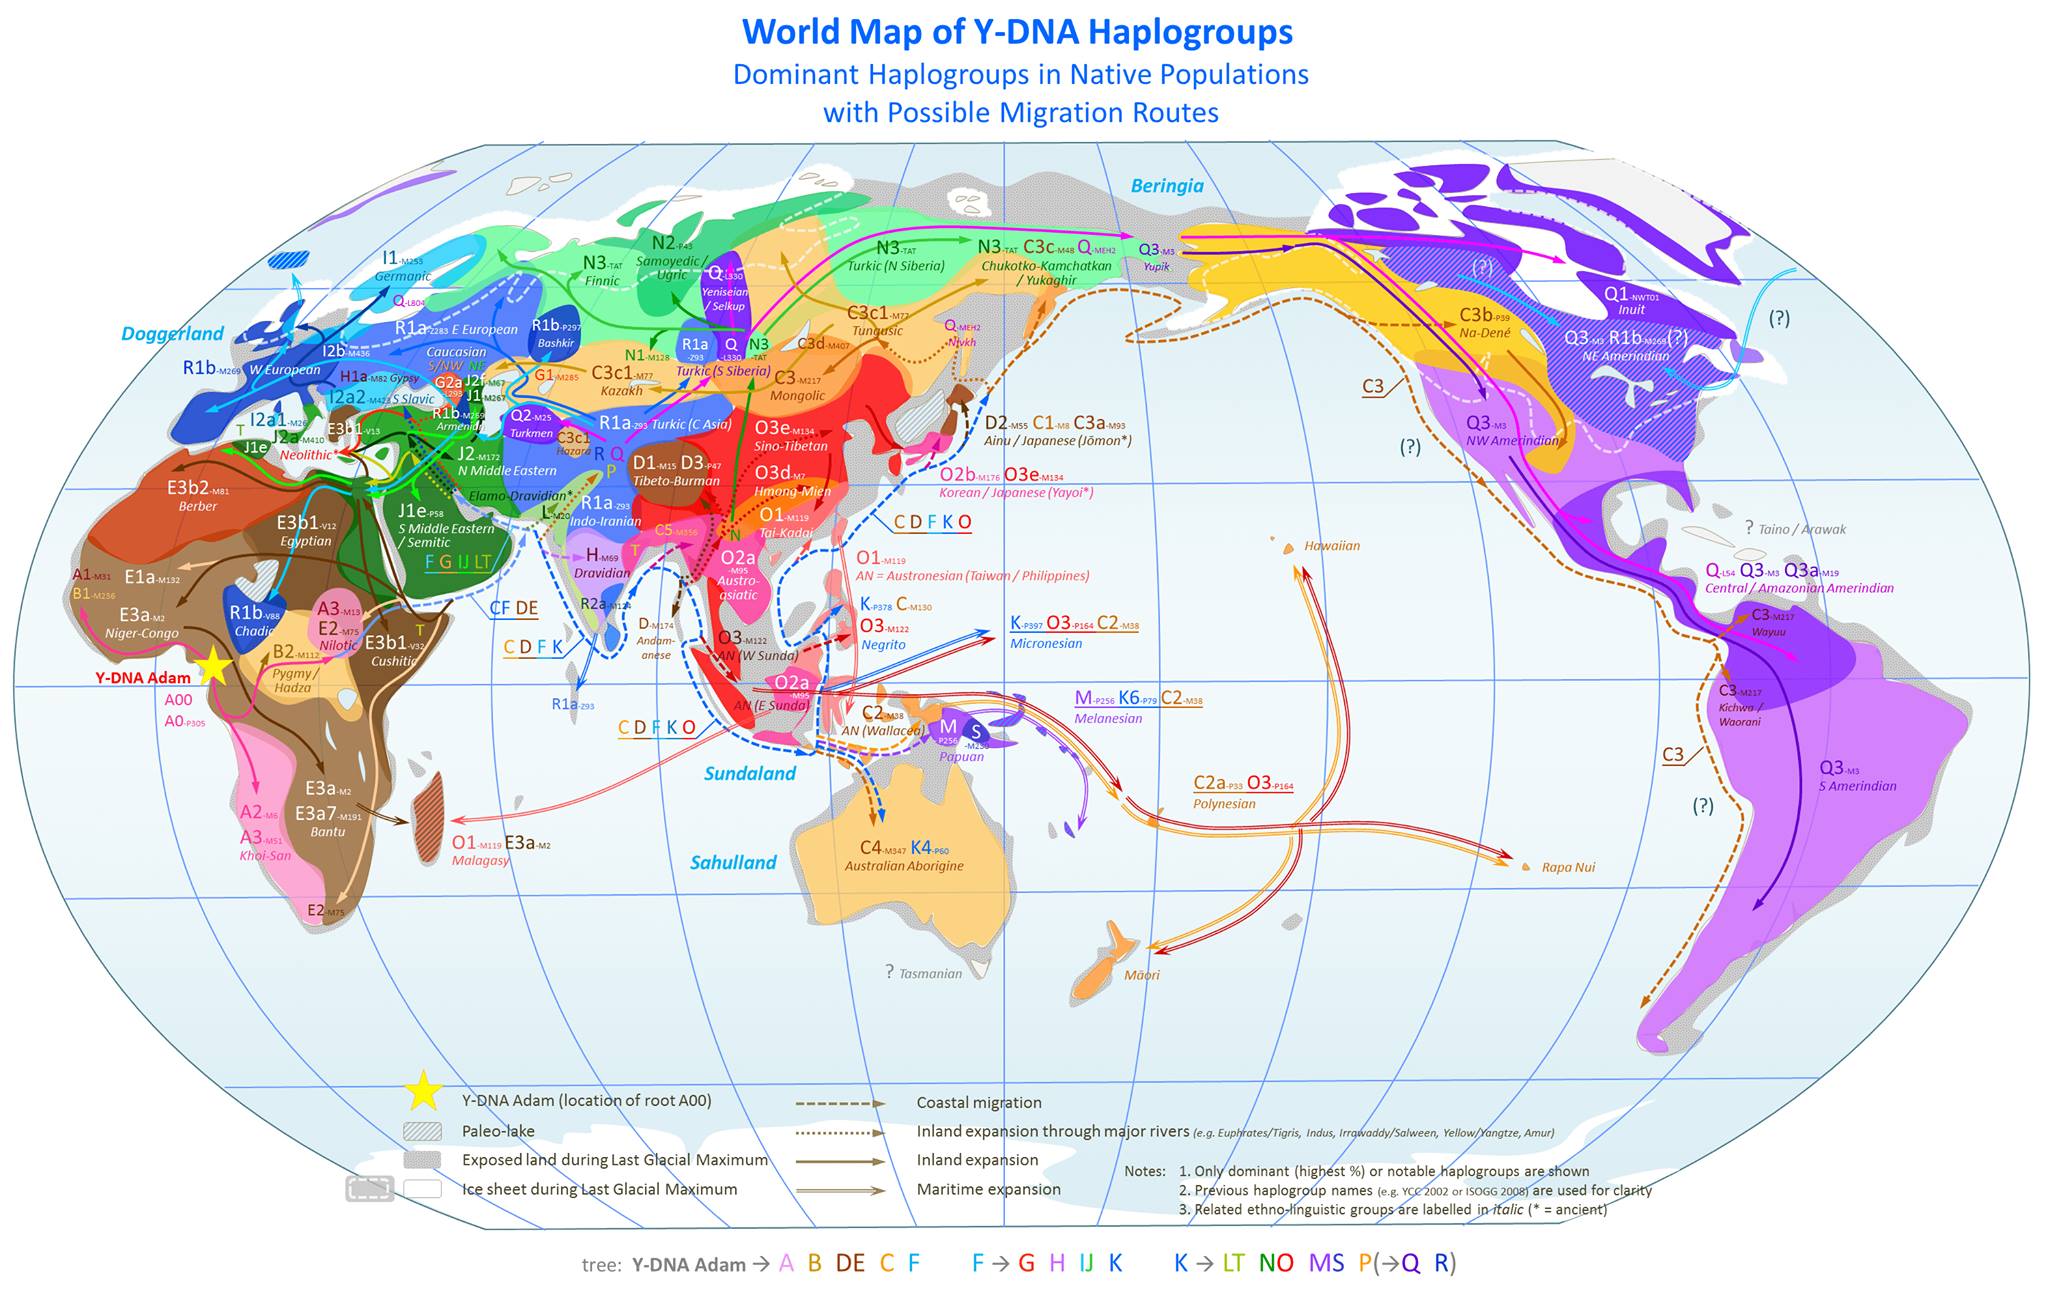 The World Map of Y-DNA Haplogroups